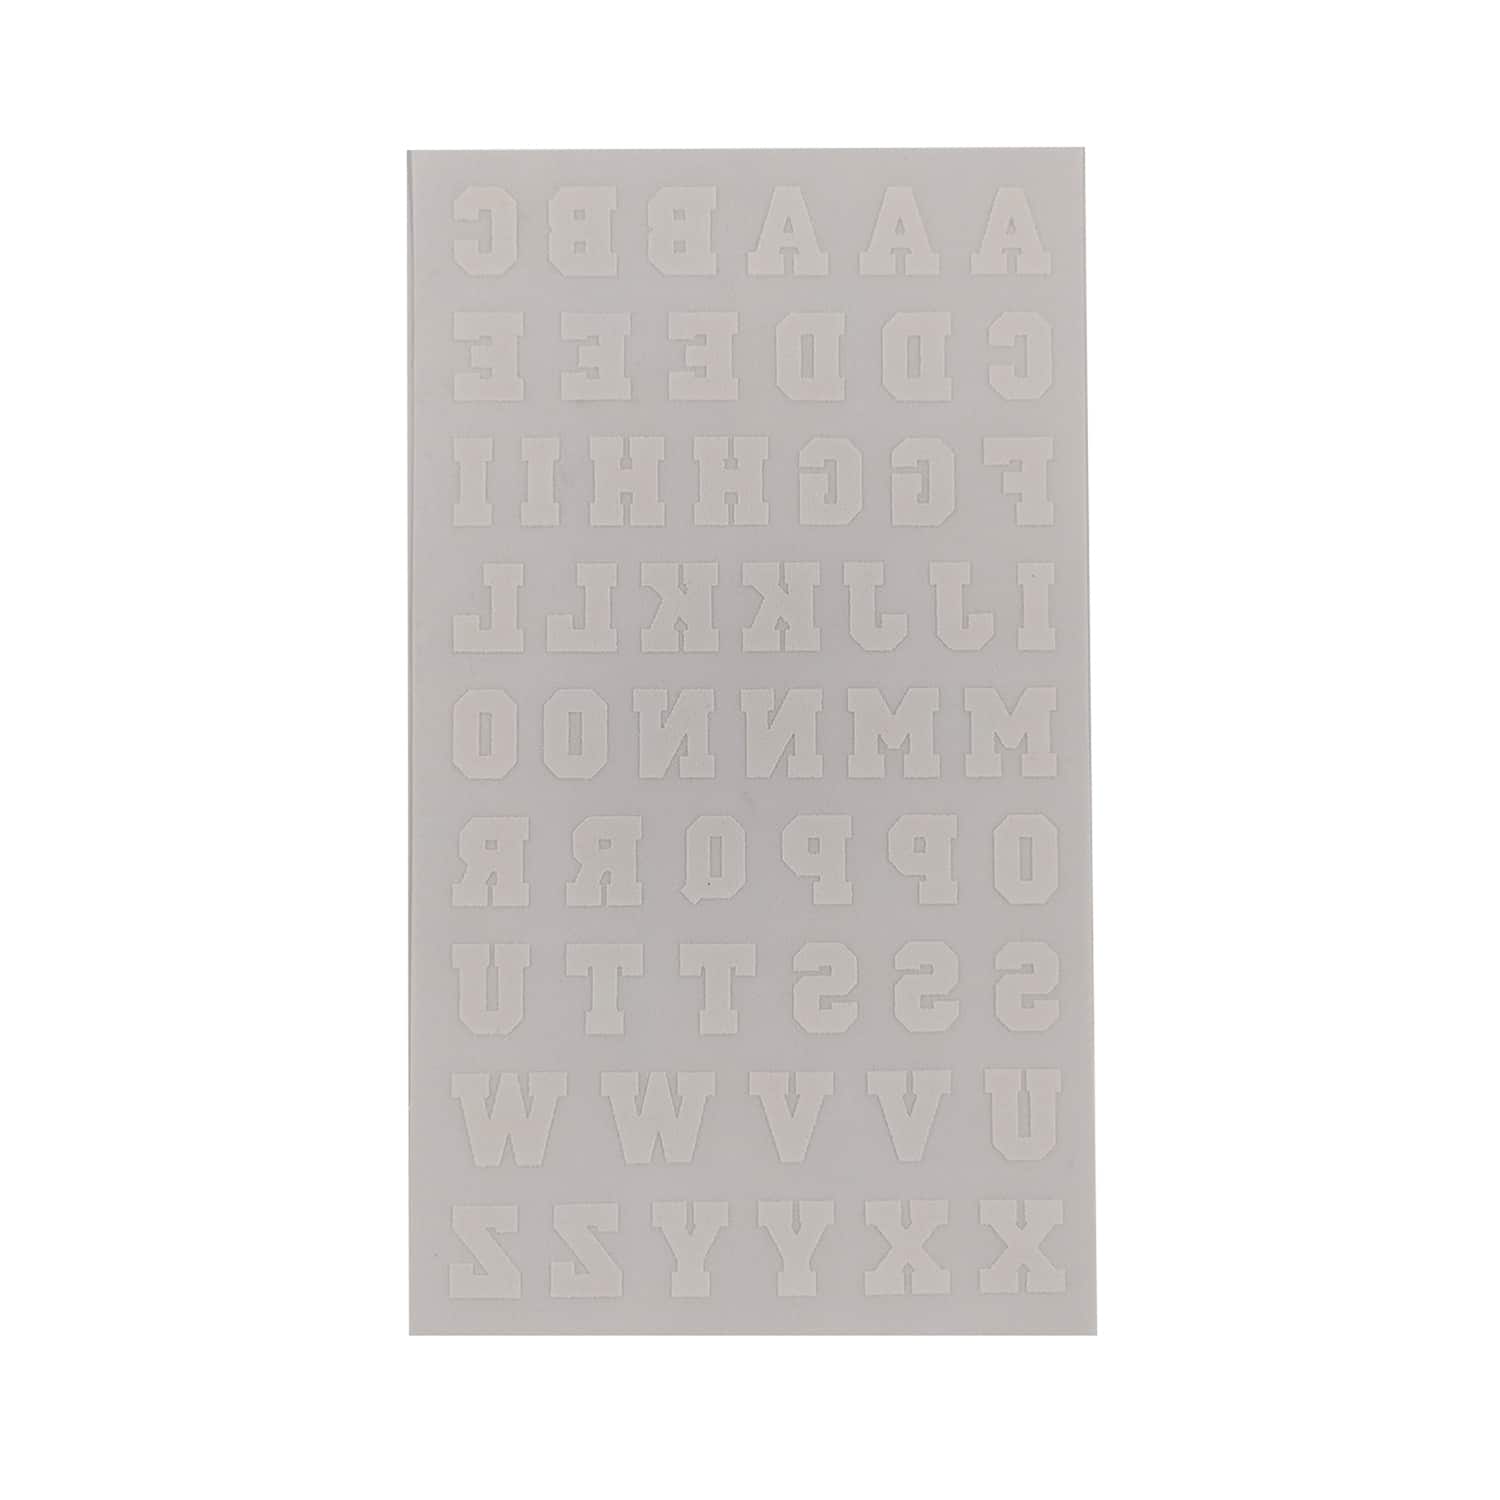 Dritz Iron-On Letters - 1 Block-White